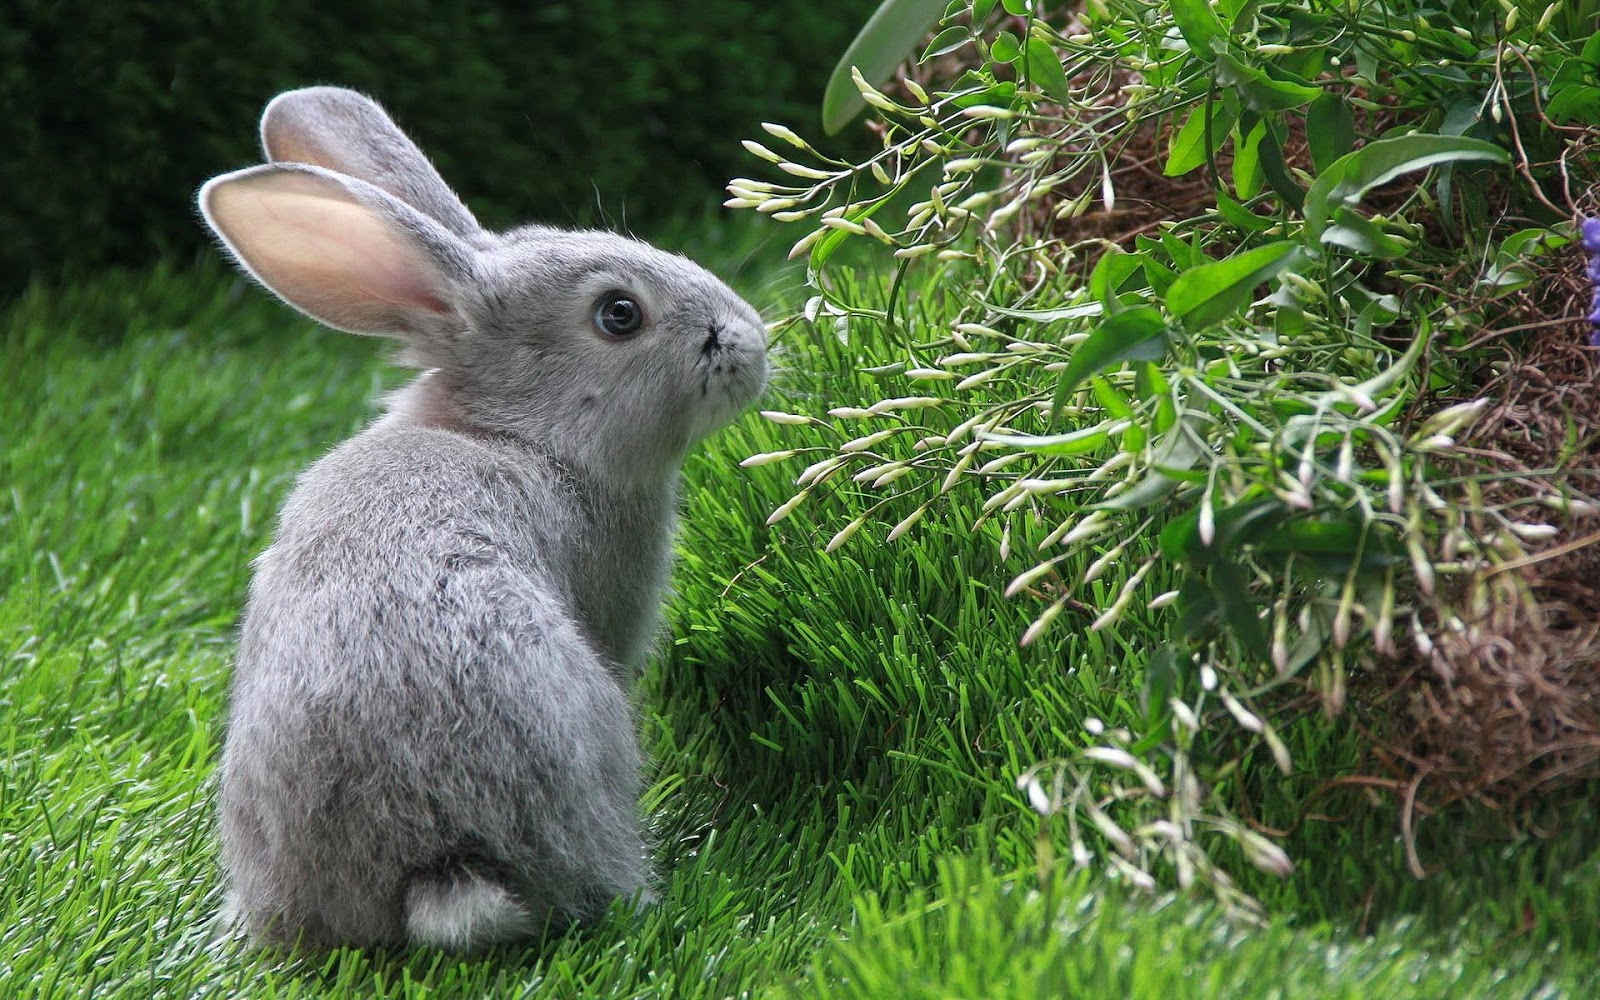  animal wallpaper of a gray rabbit in the backyard Rabbit wallpaper